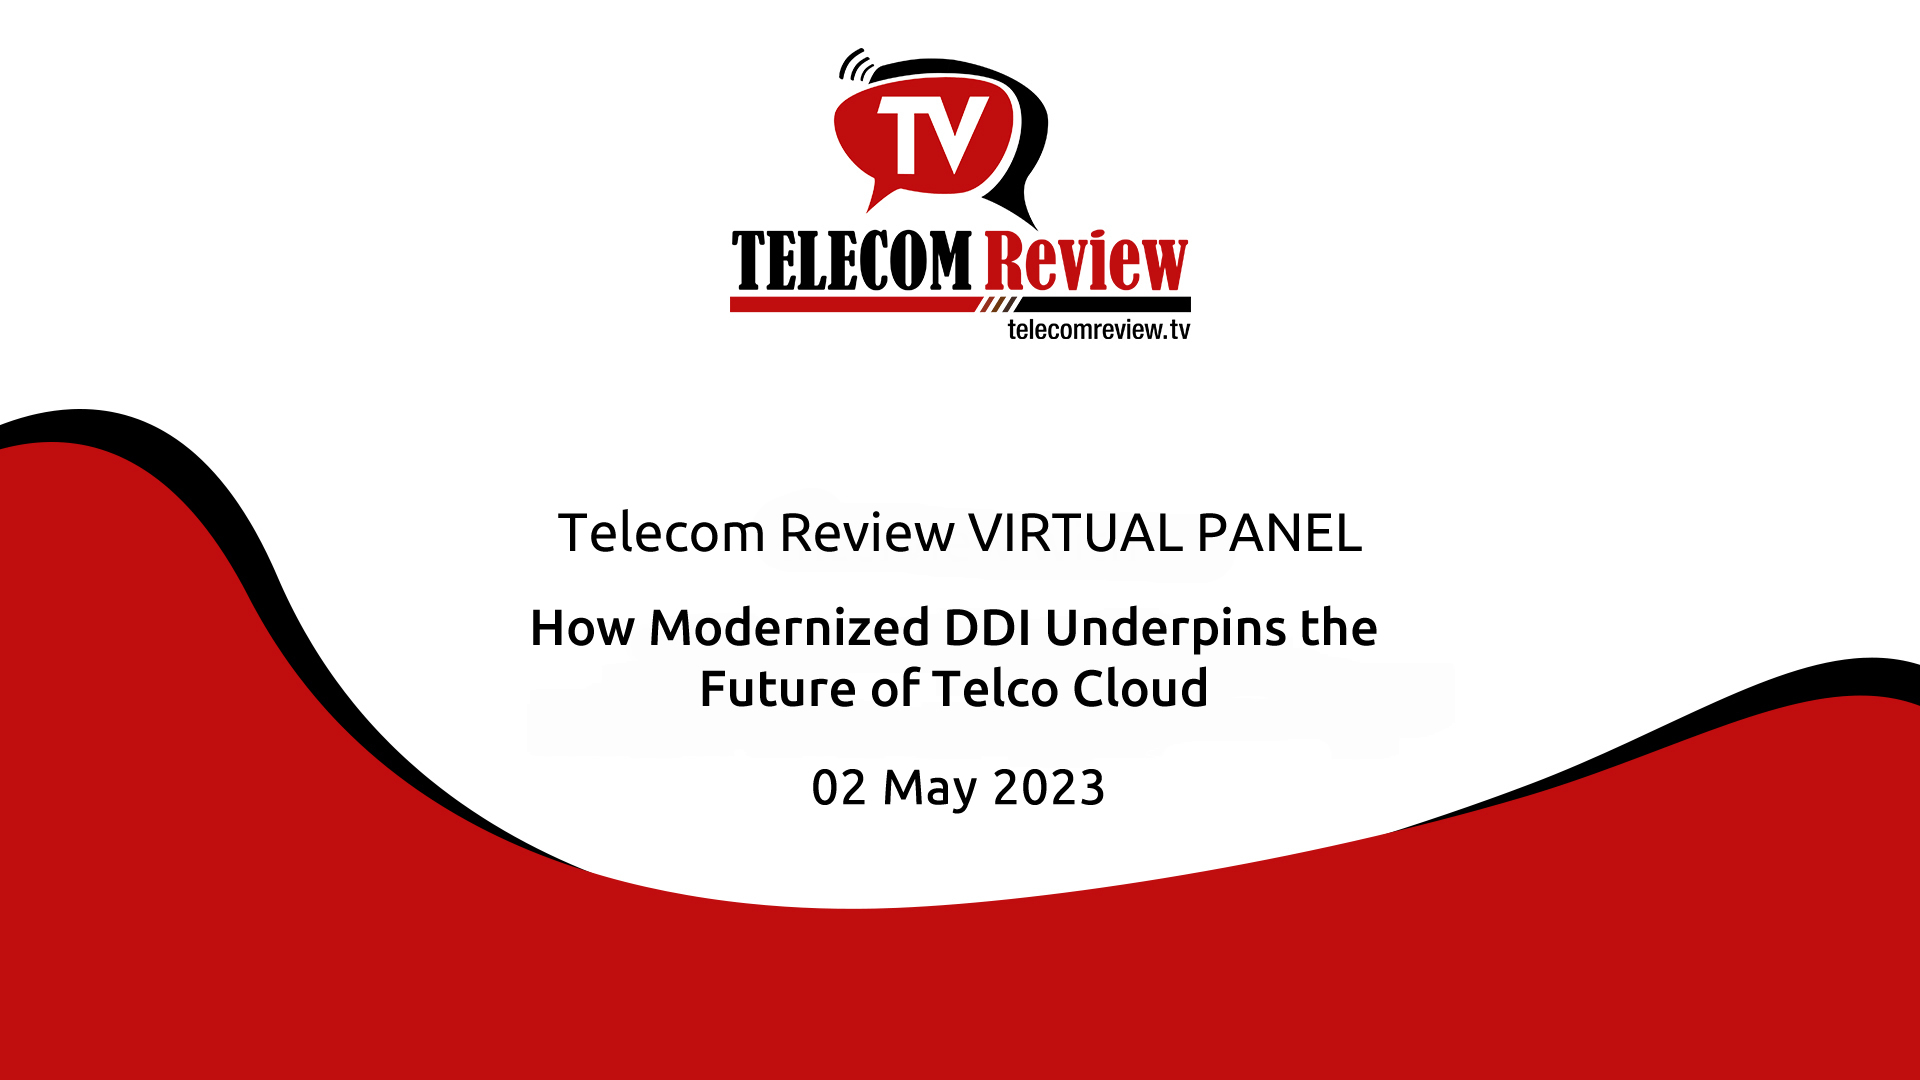 Webinar Highlights: How Modernized DDI Underpins the Future of Telco Cloud